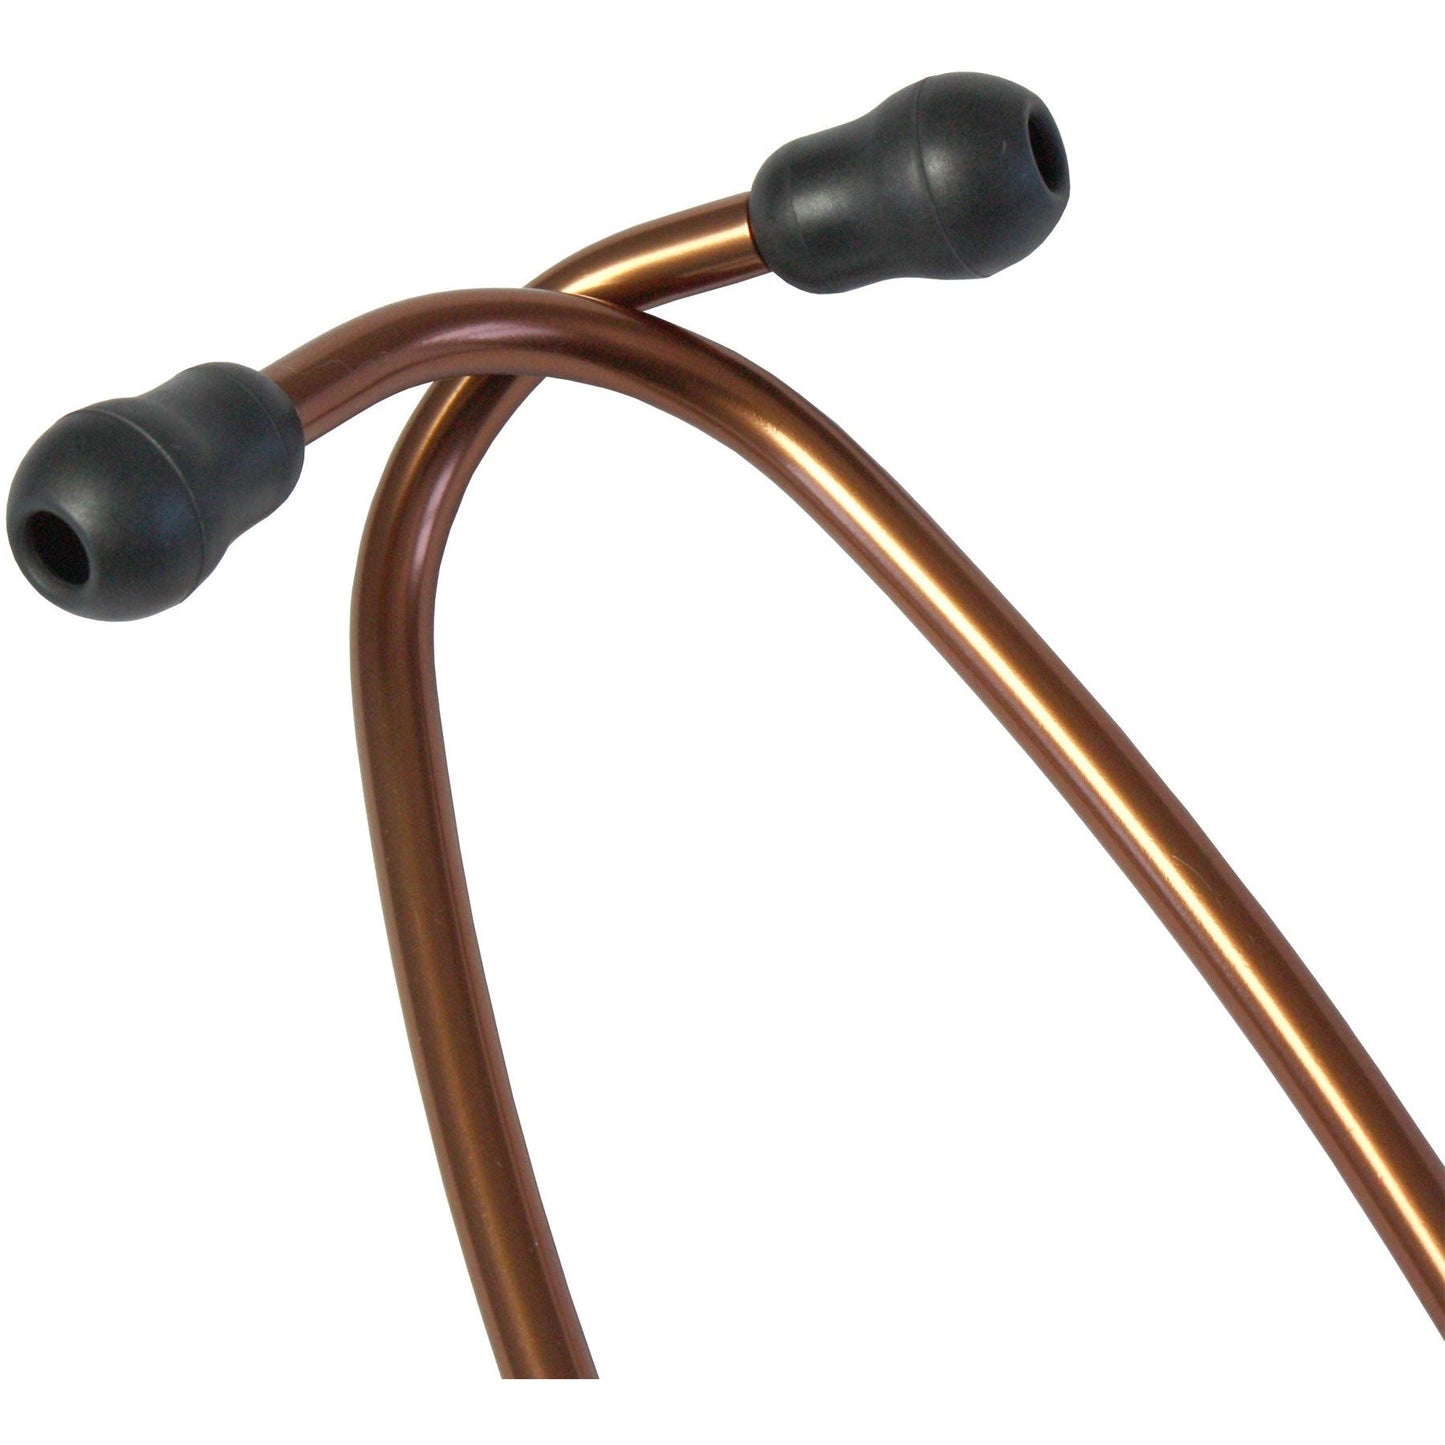 Littmann Classic III Monitoring Stethoscope: Chocolate & Copper 5809